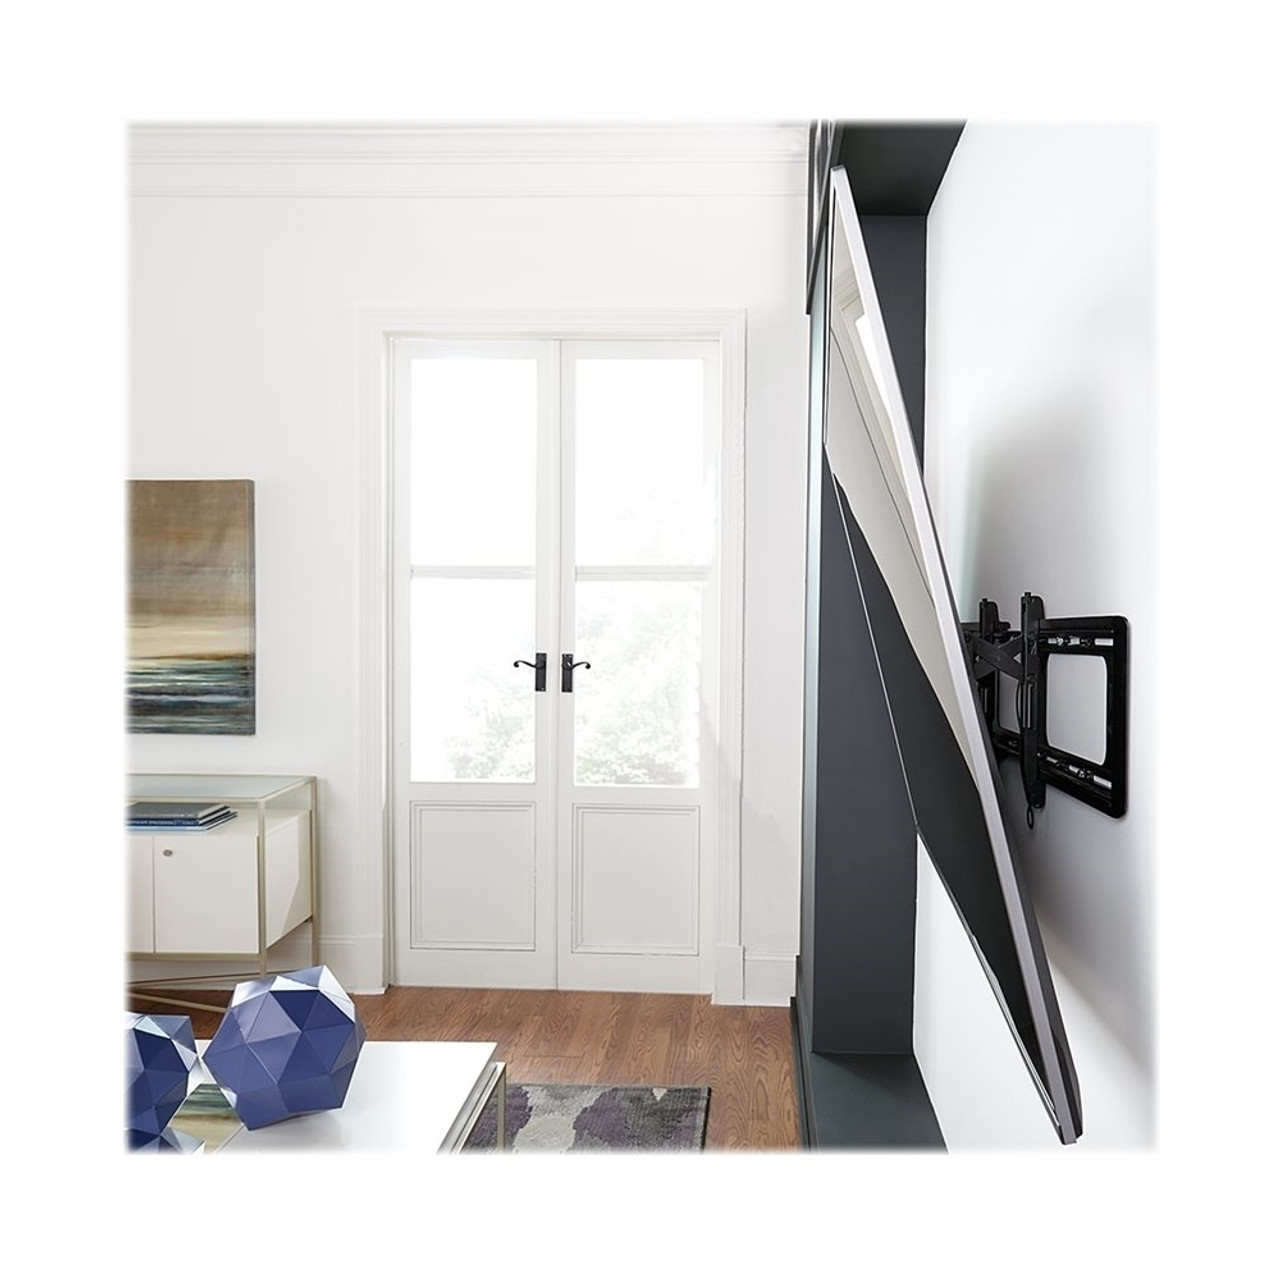 Sanus - Elite Series Advanced Tilt TV Wall Mount For Most 46" - 95" TVs - Extends 5.9" - Black